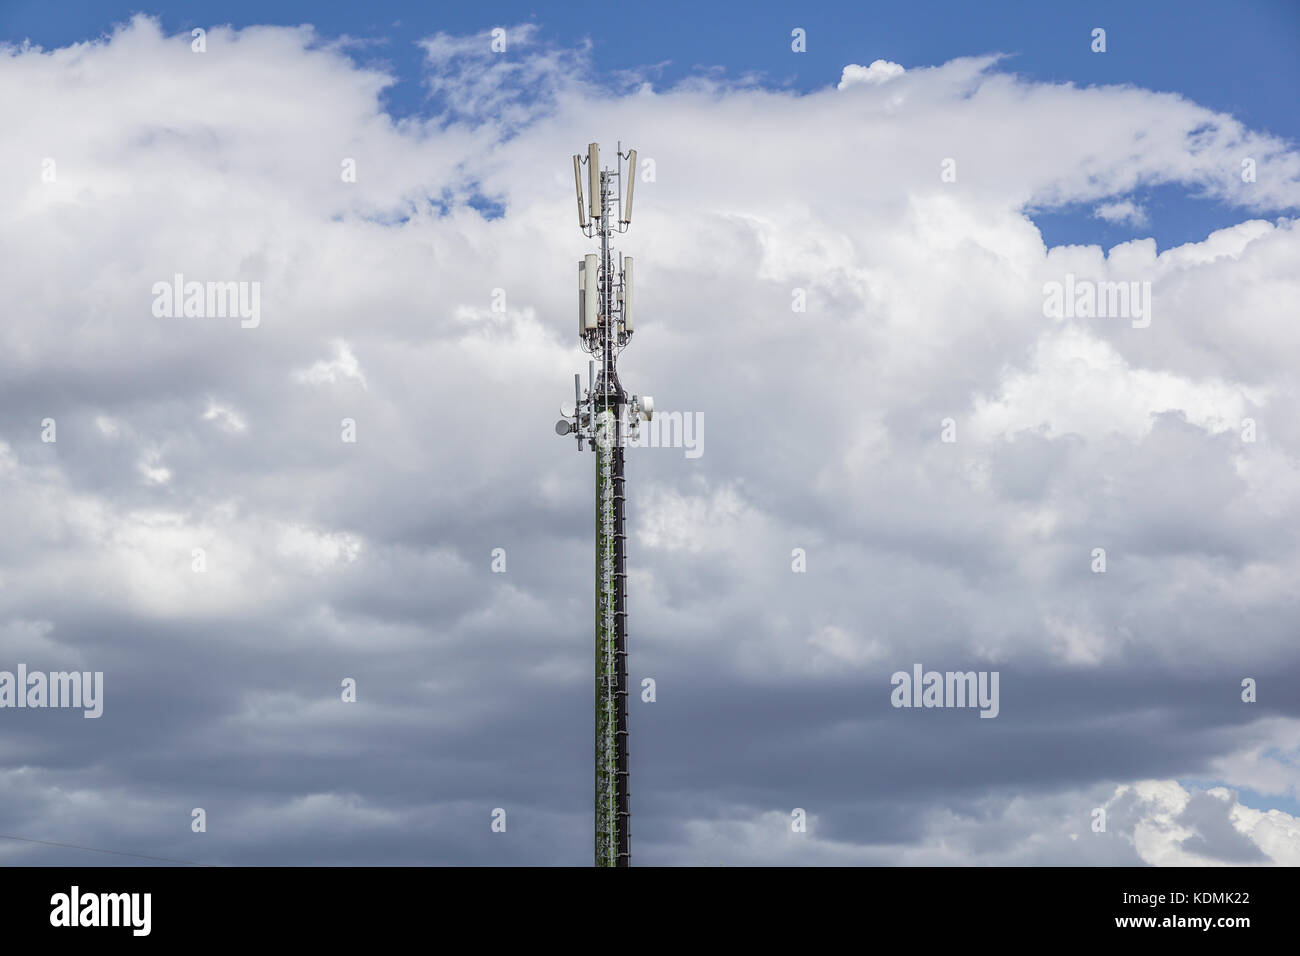 Communication pole on blue sky with cloud Stock Photo